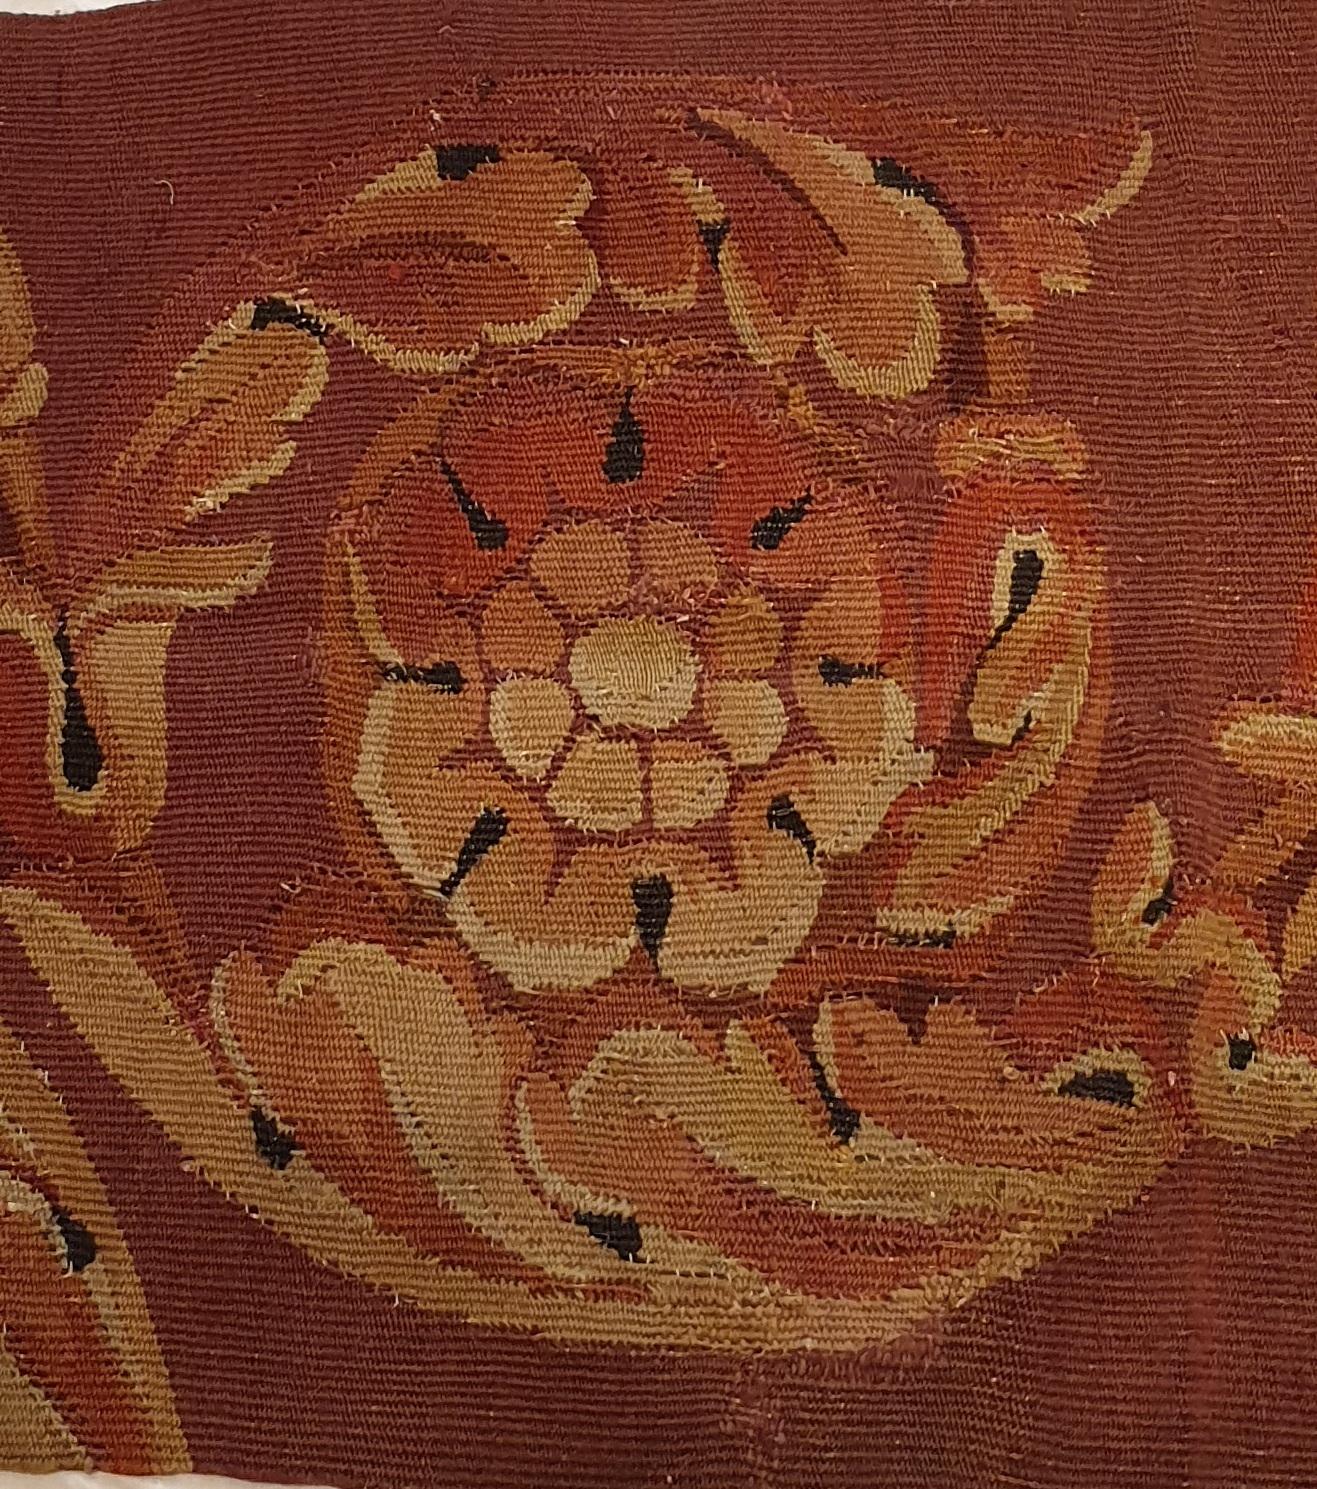 824 - 19th Century Aubusson Carpet Piece In Excellent Condition For Sale In Paris, FR